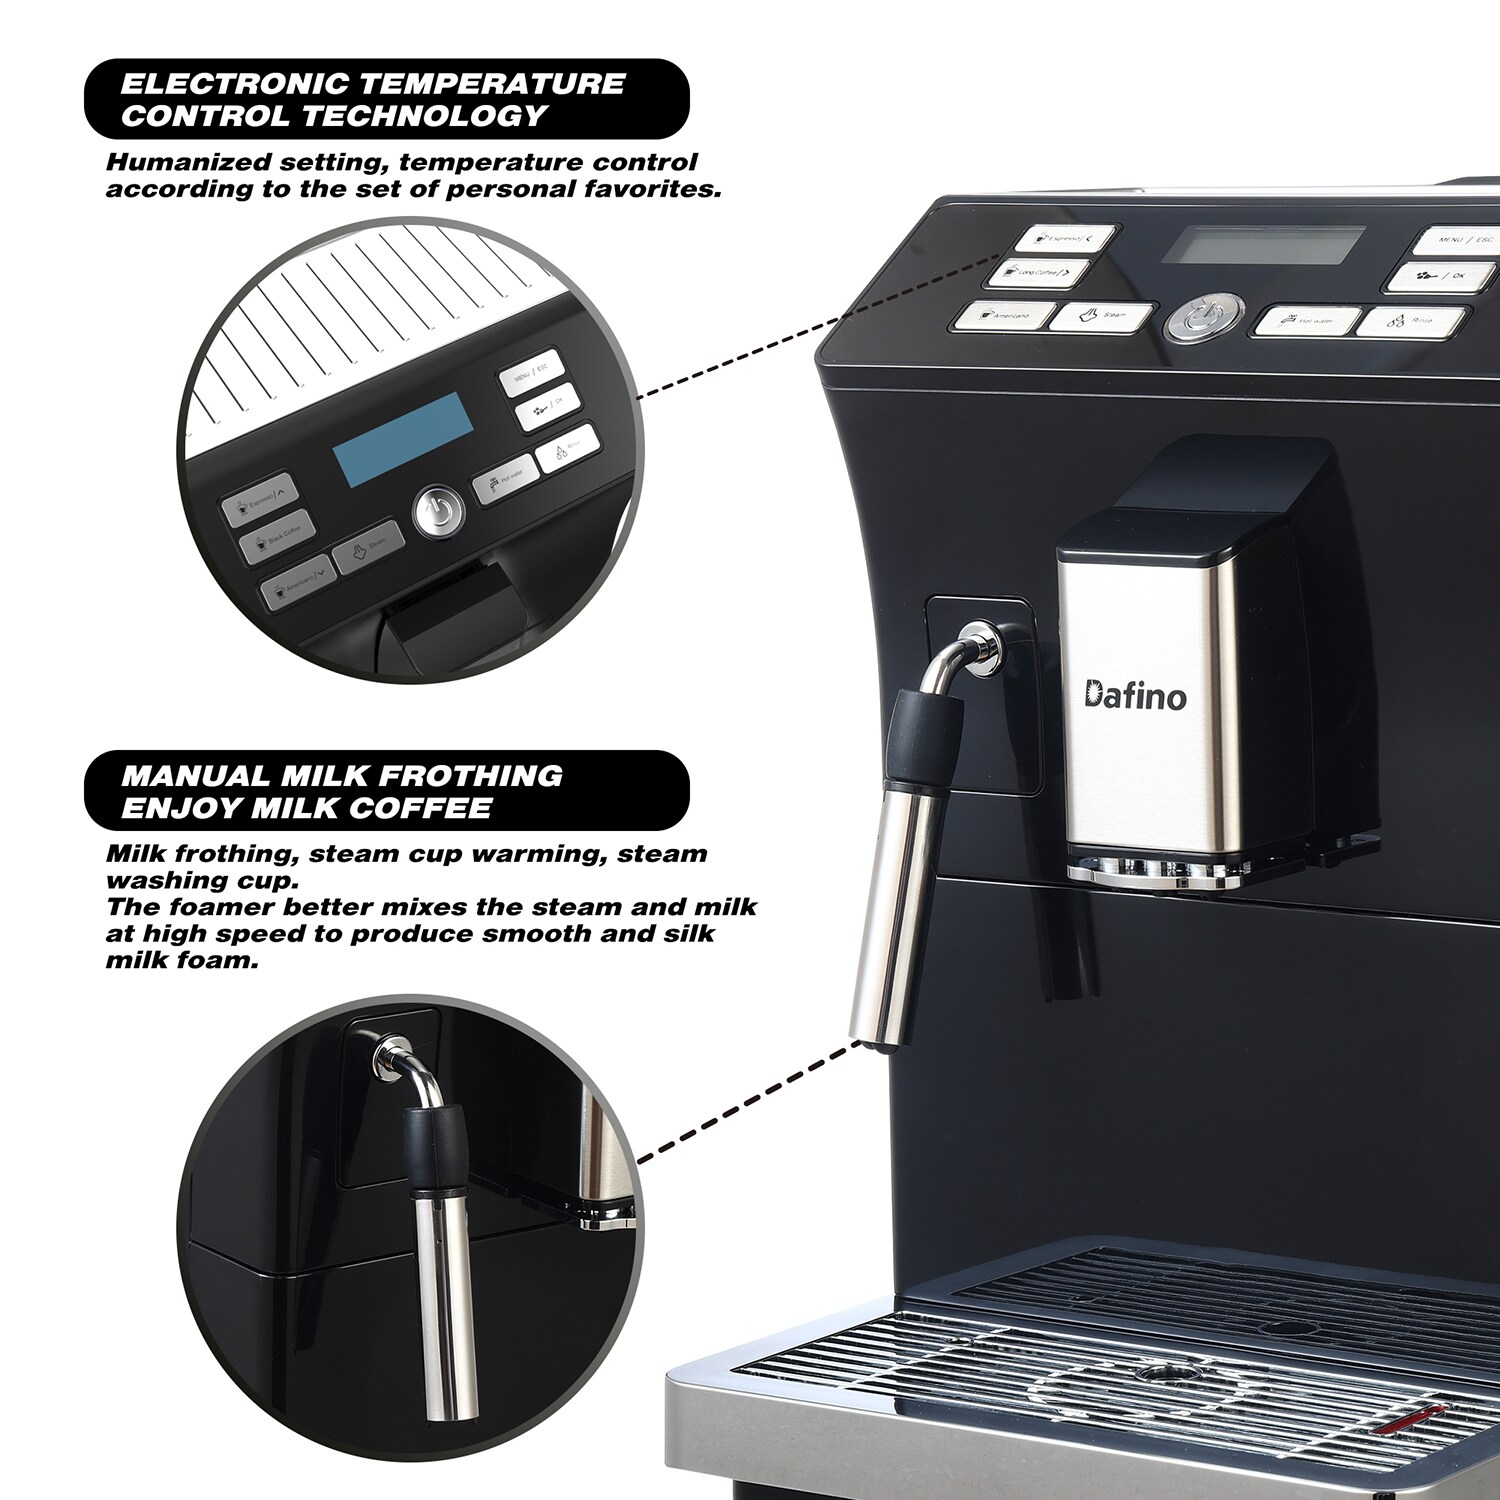 Automatic coffee machine vs manual coffee machine